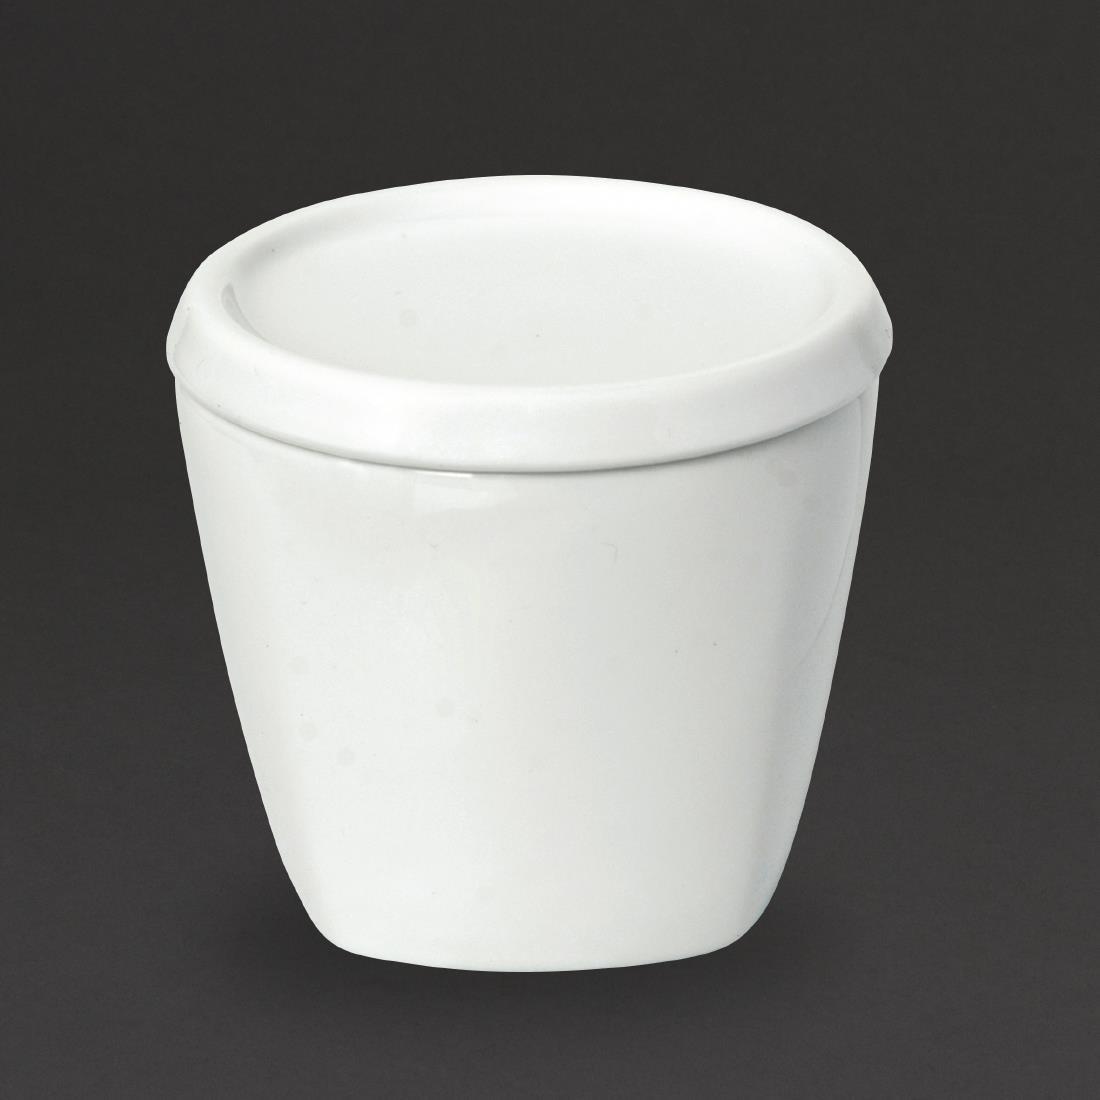 Royal Porcelain Kana Sugar Bowls with Lids (Pack of 12) - CG110  - 1